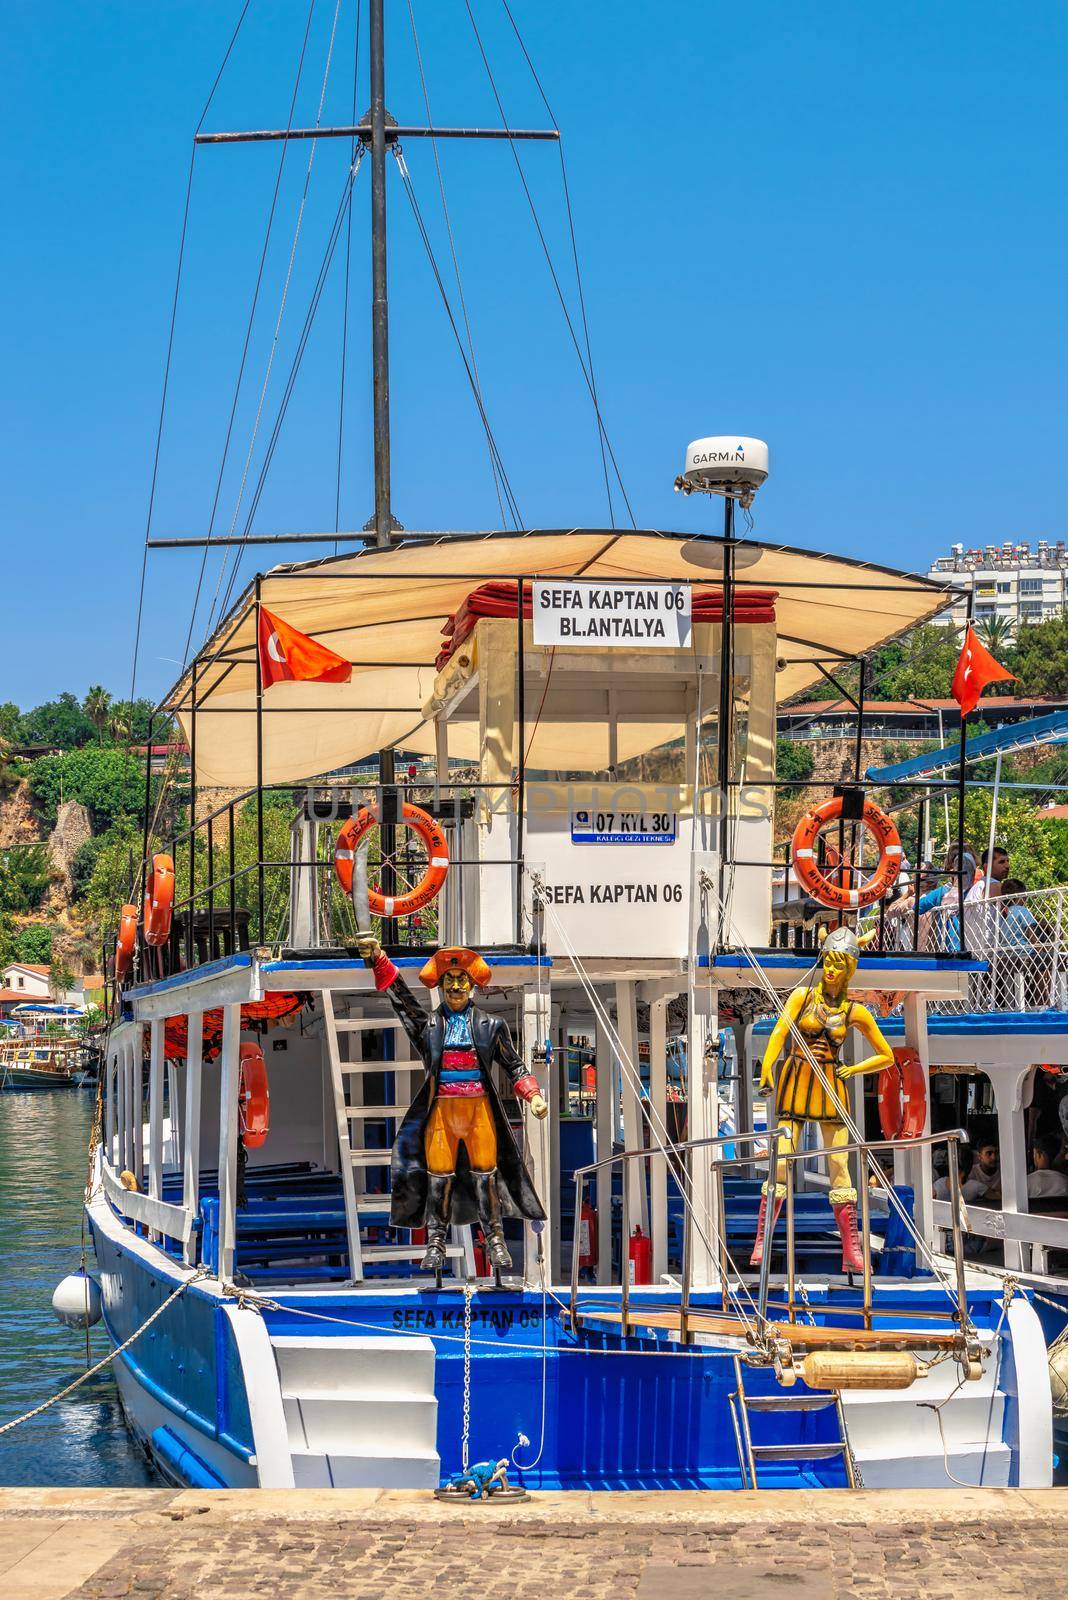 Pleasure boats in the harbor of Antalya, Turkey by Multipedia